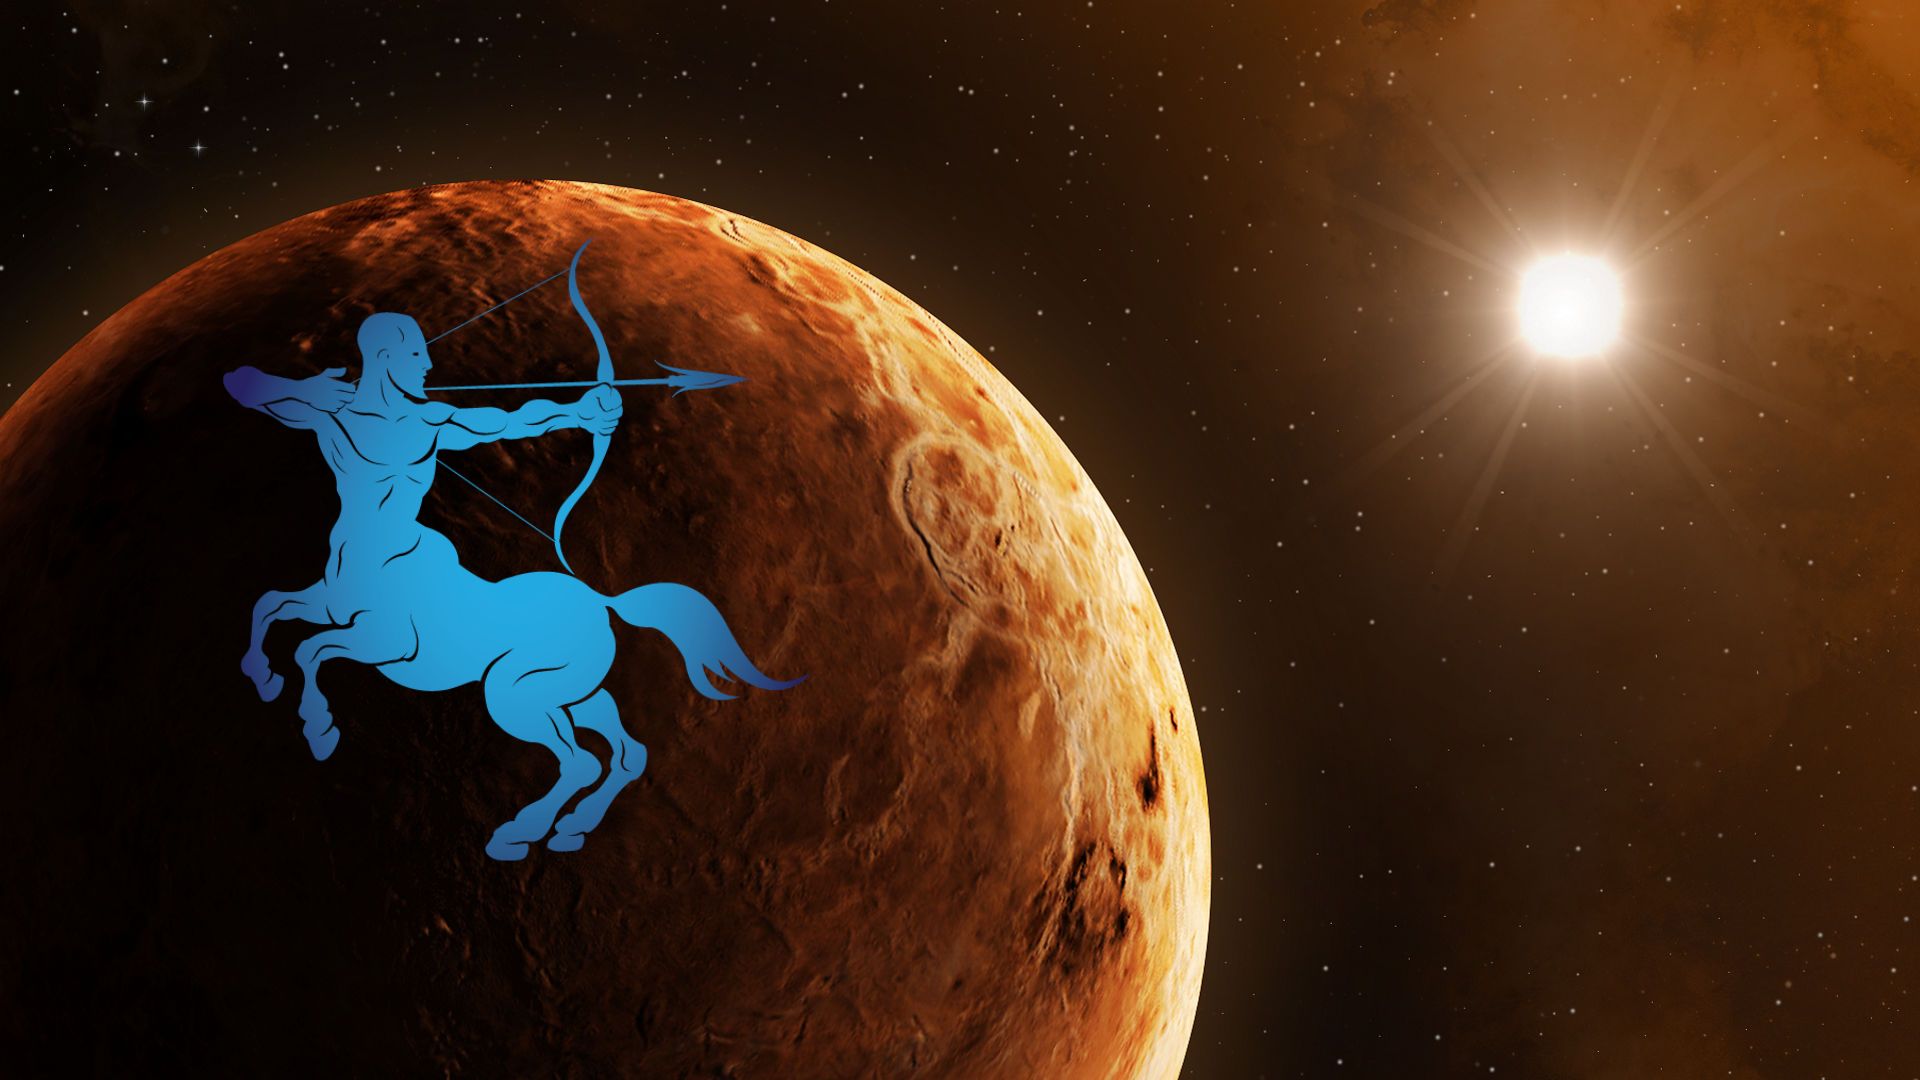 Sagittarius Symbol On Venus Planet with the Sun in theBack